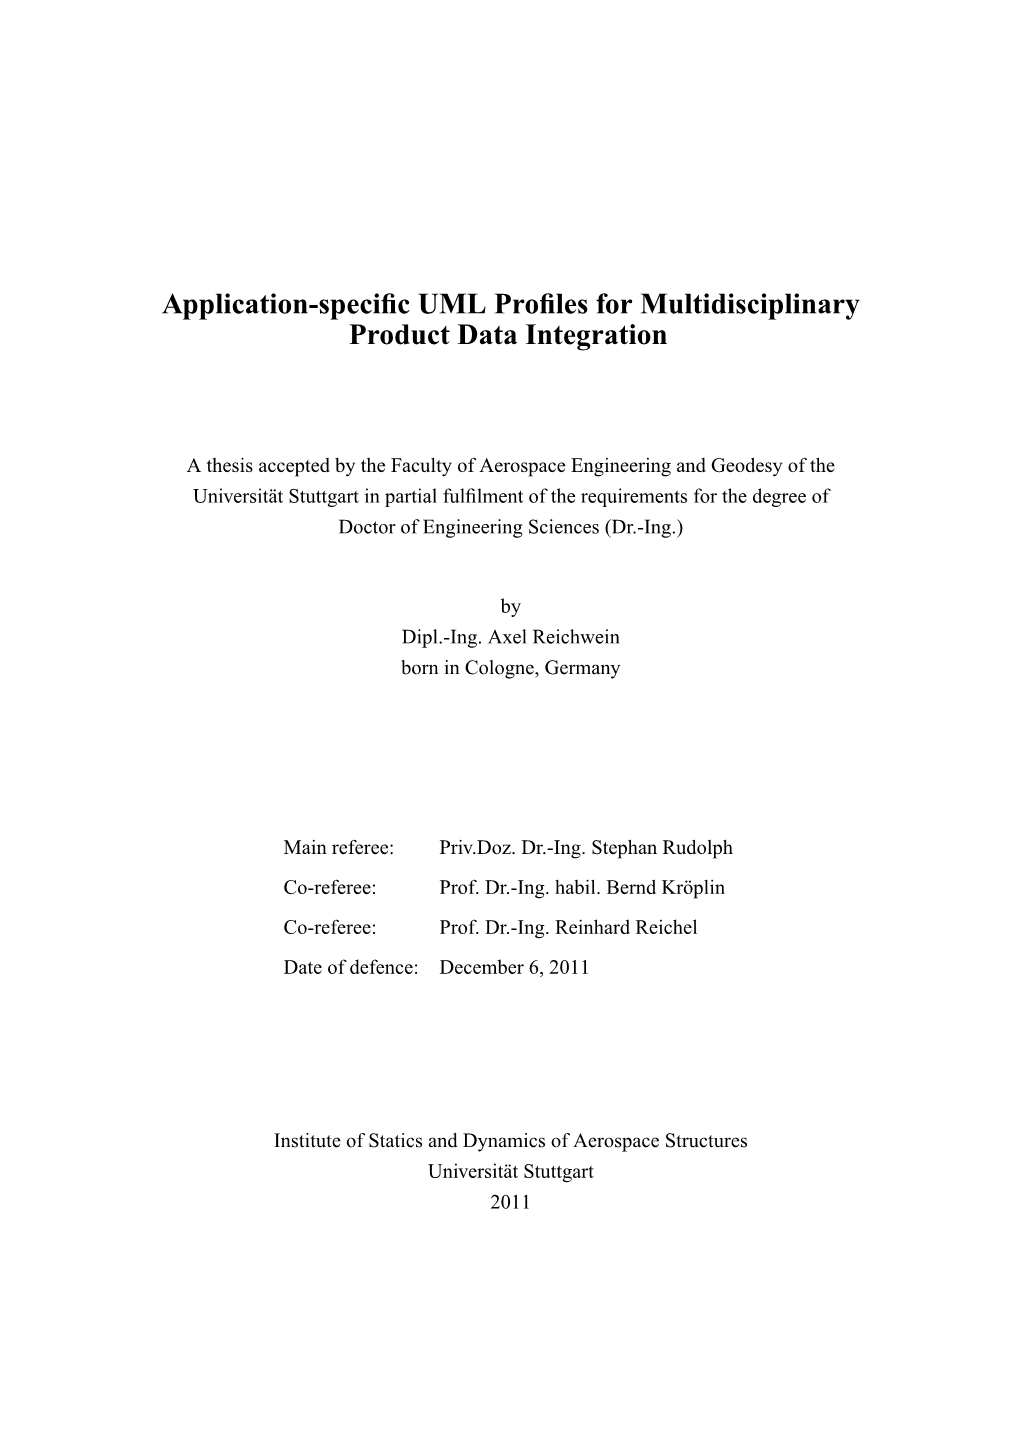 Application-Specific UML Profiles for Multidisciplinary Product Data